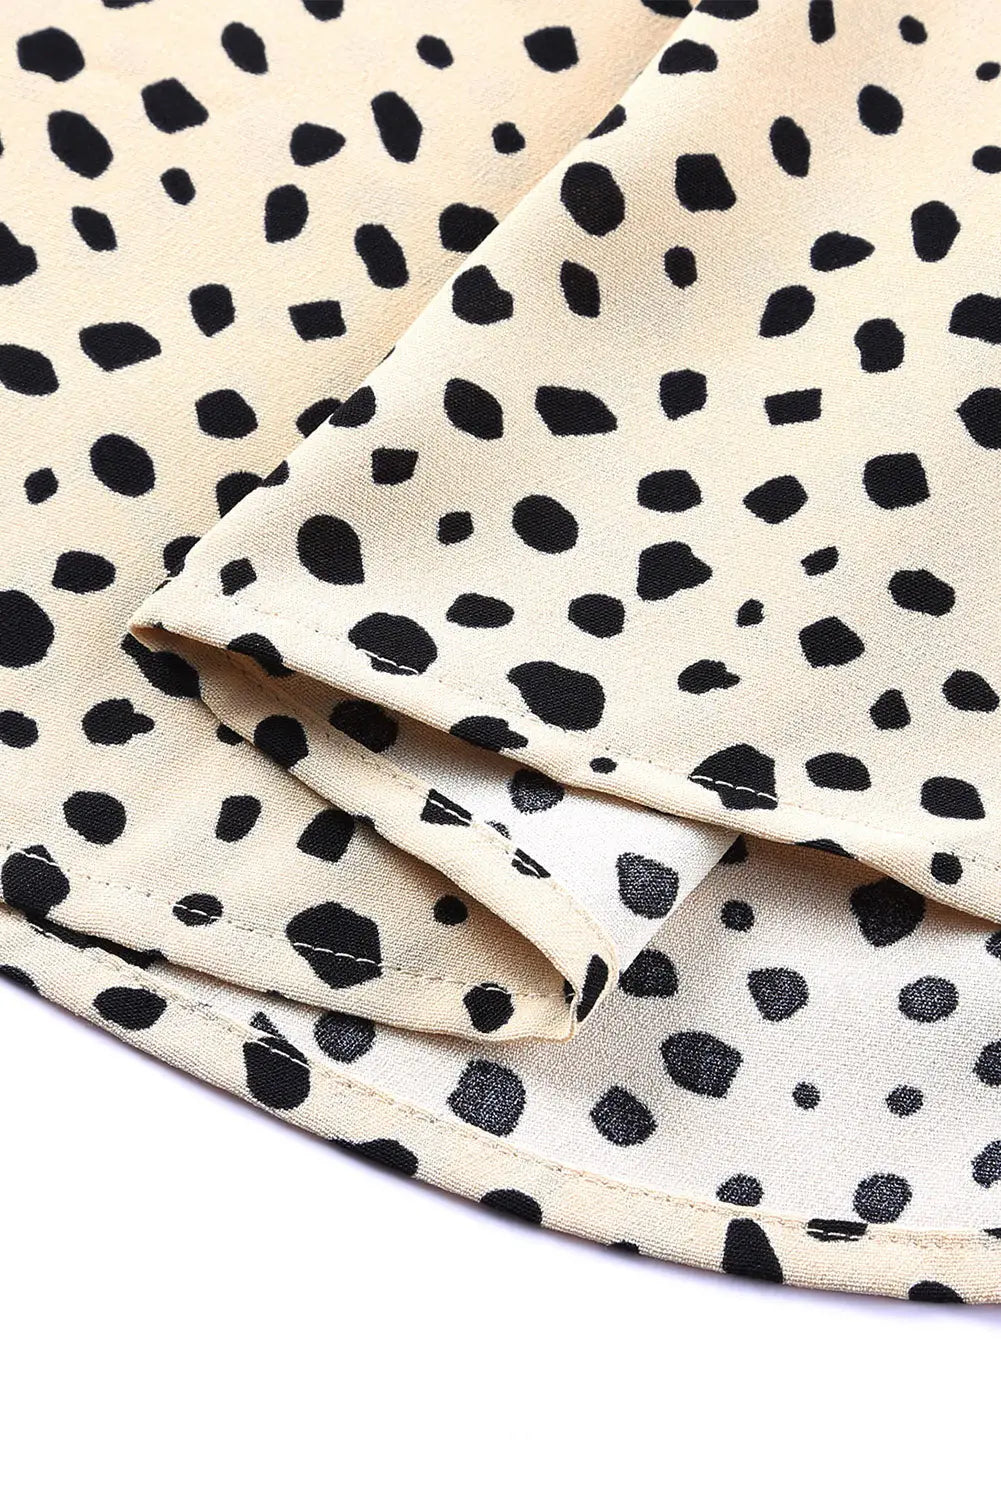 Leopard colorblock swiss dot flutter sleeve square neck mini dress - dresses